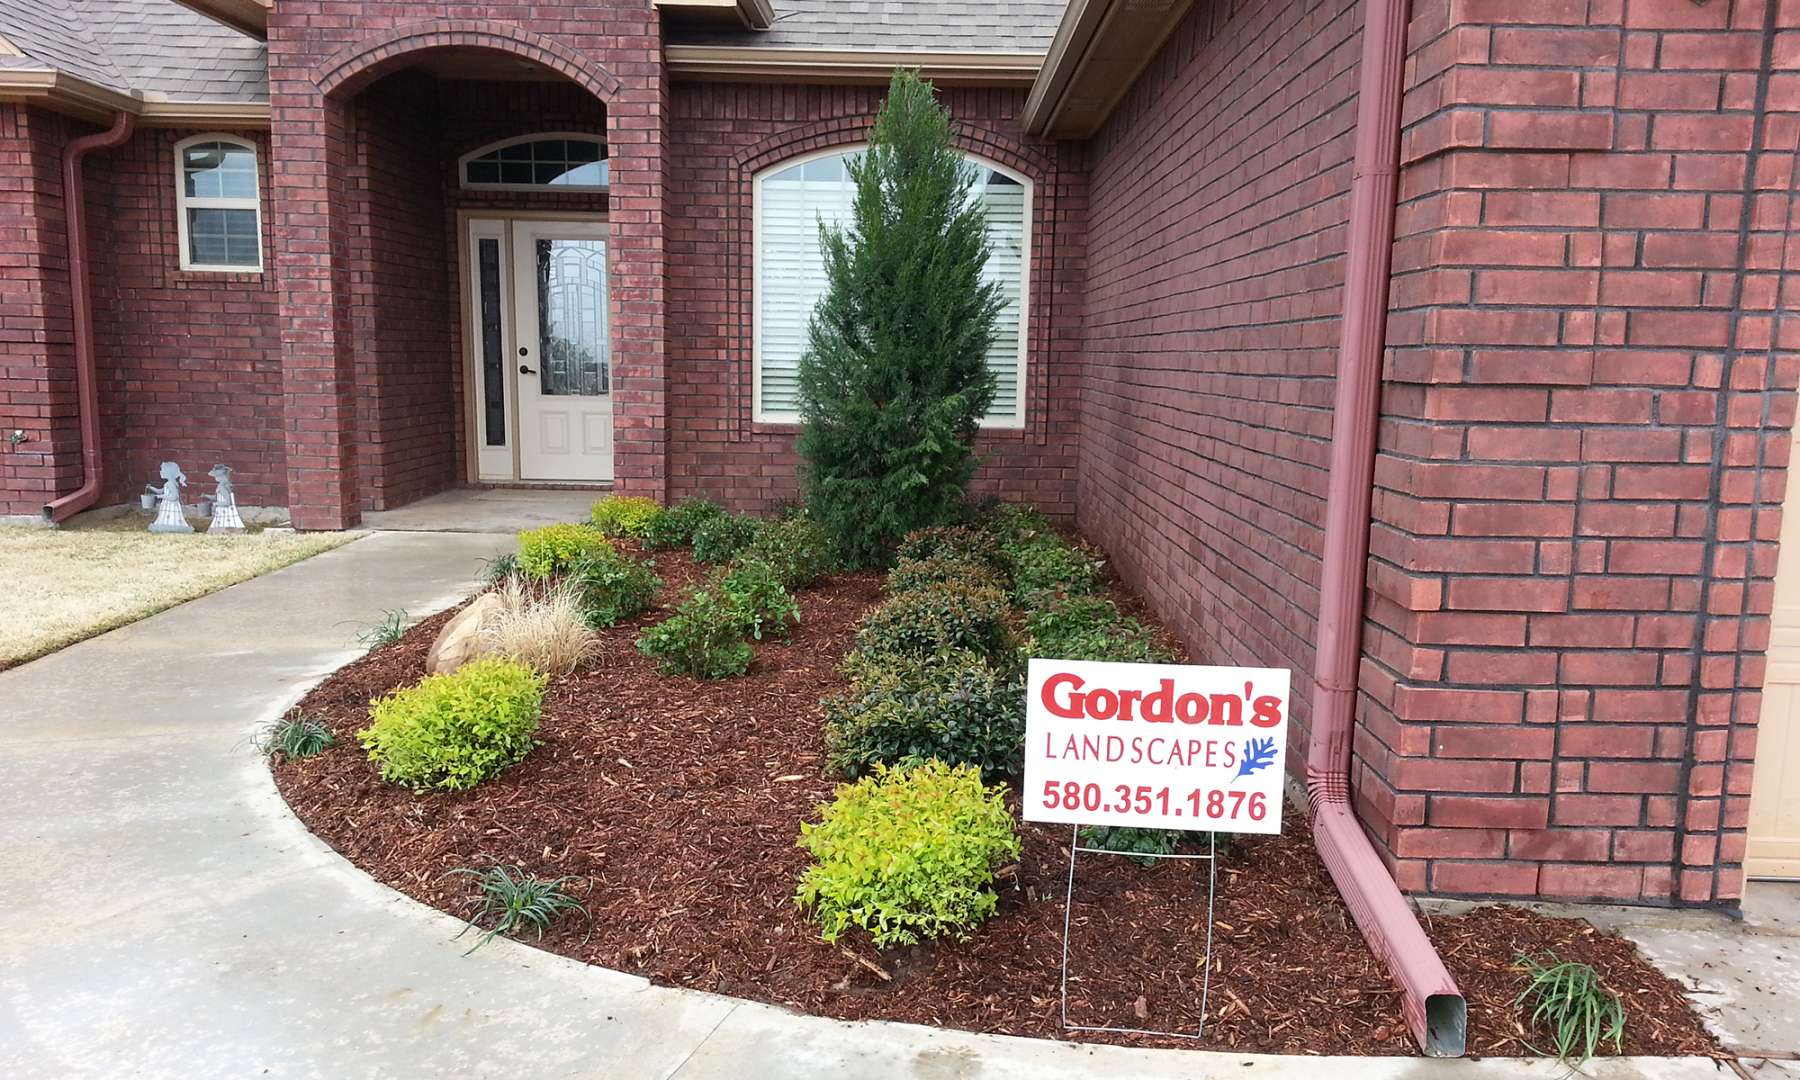 Landscaping in Lawton Oklahoma - Gordon